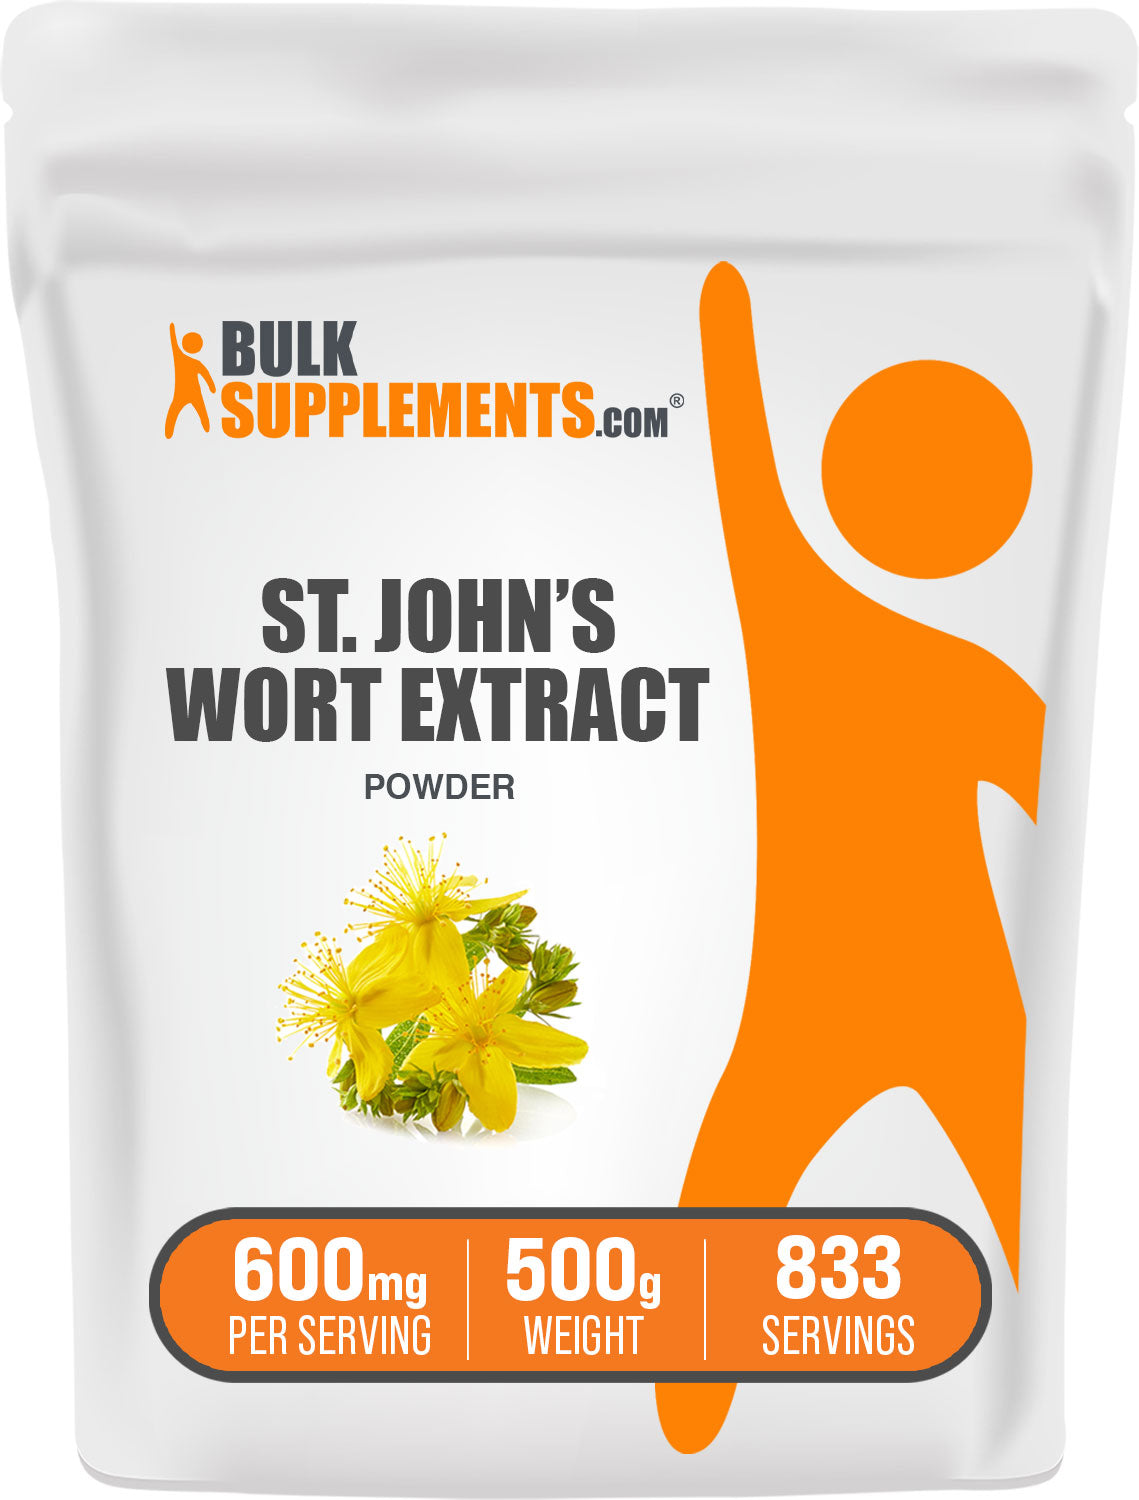 BulkSupplements St. John's Wort Extract Powder 500g bag